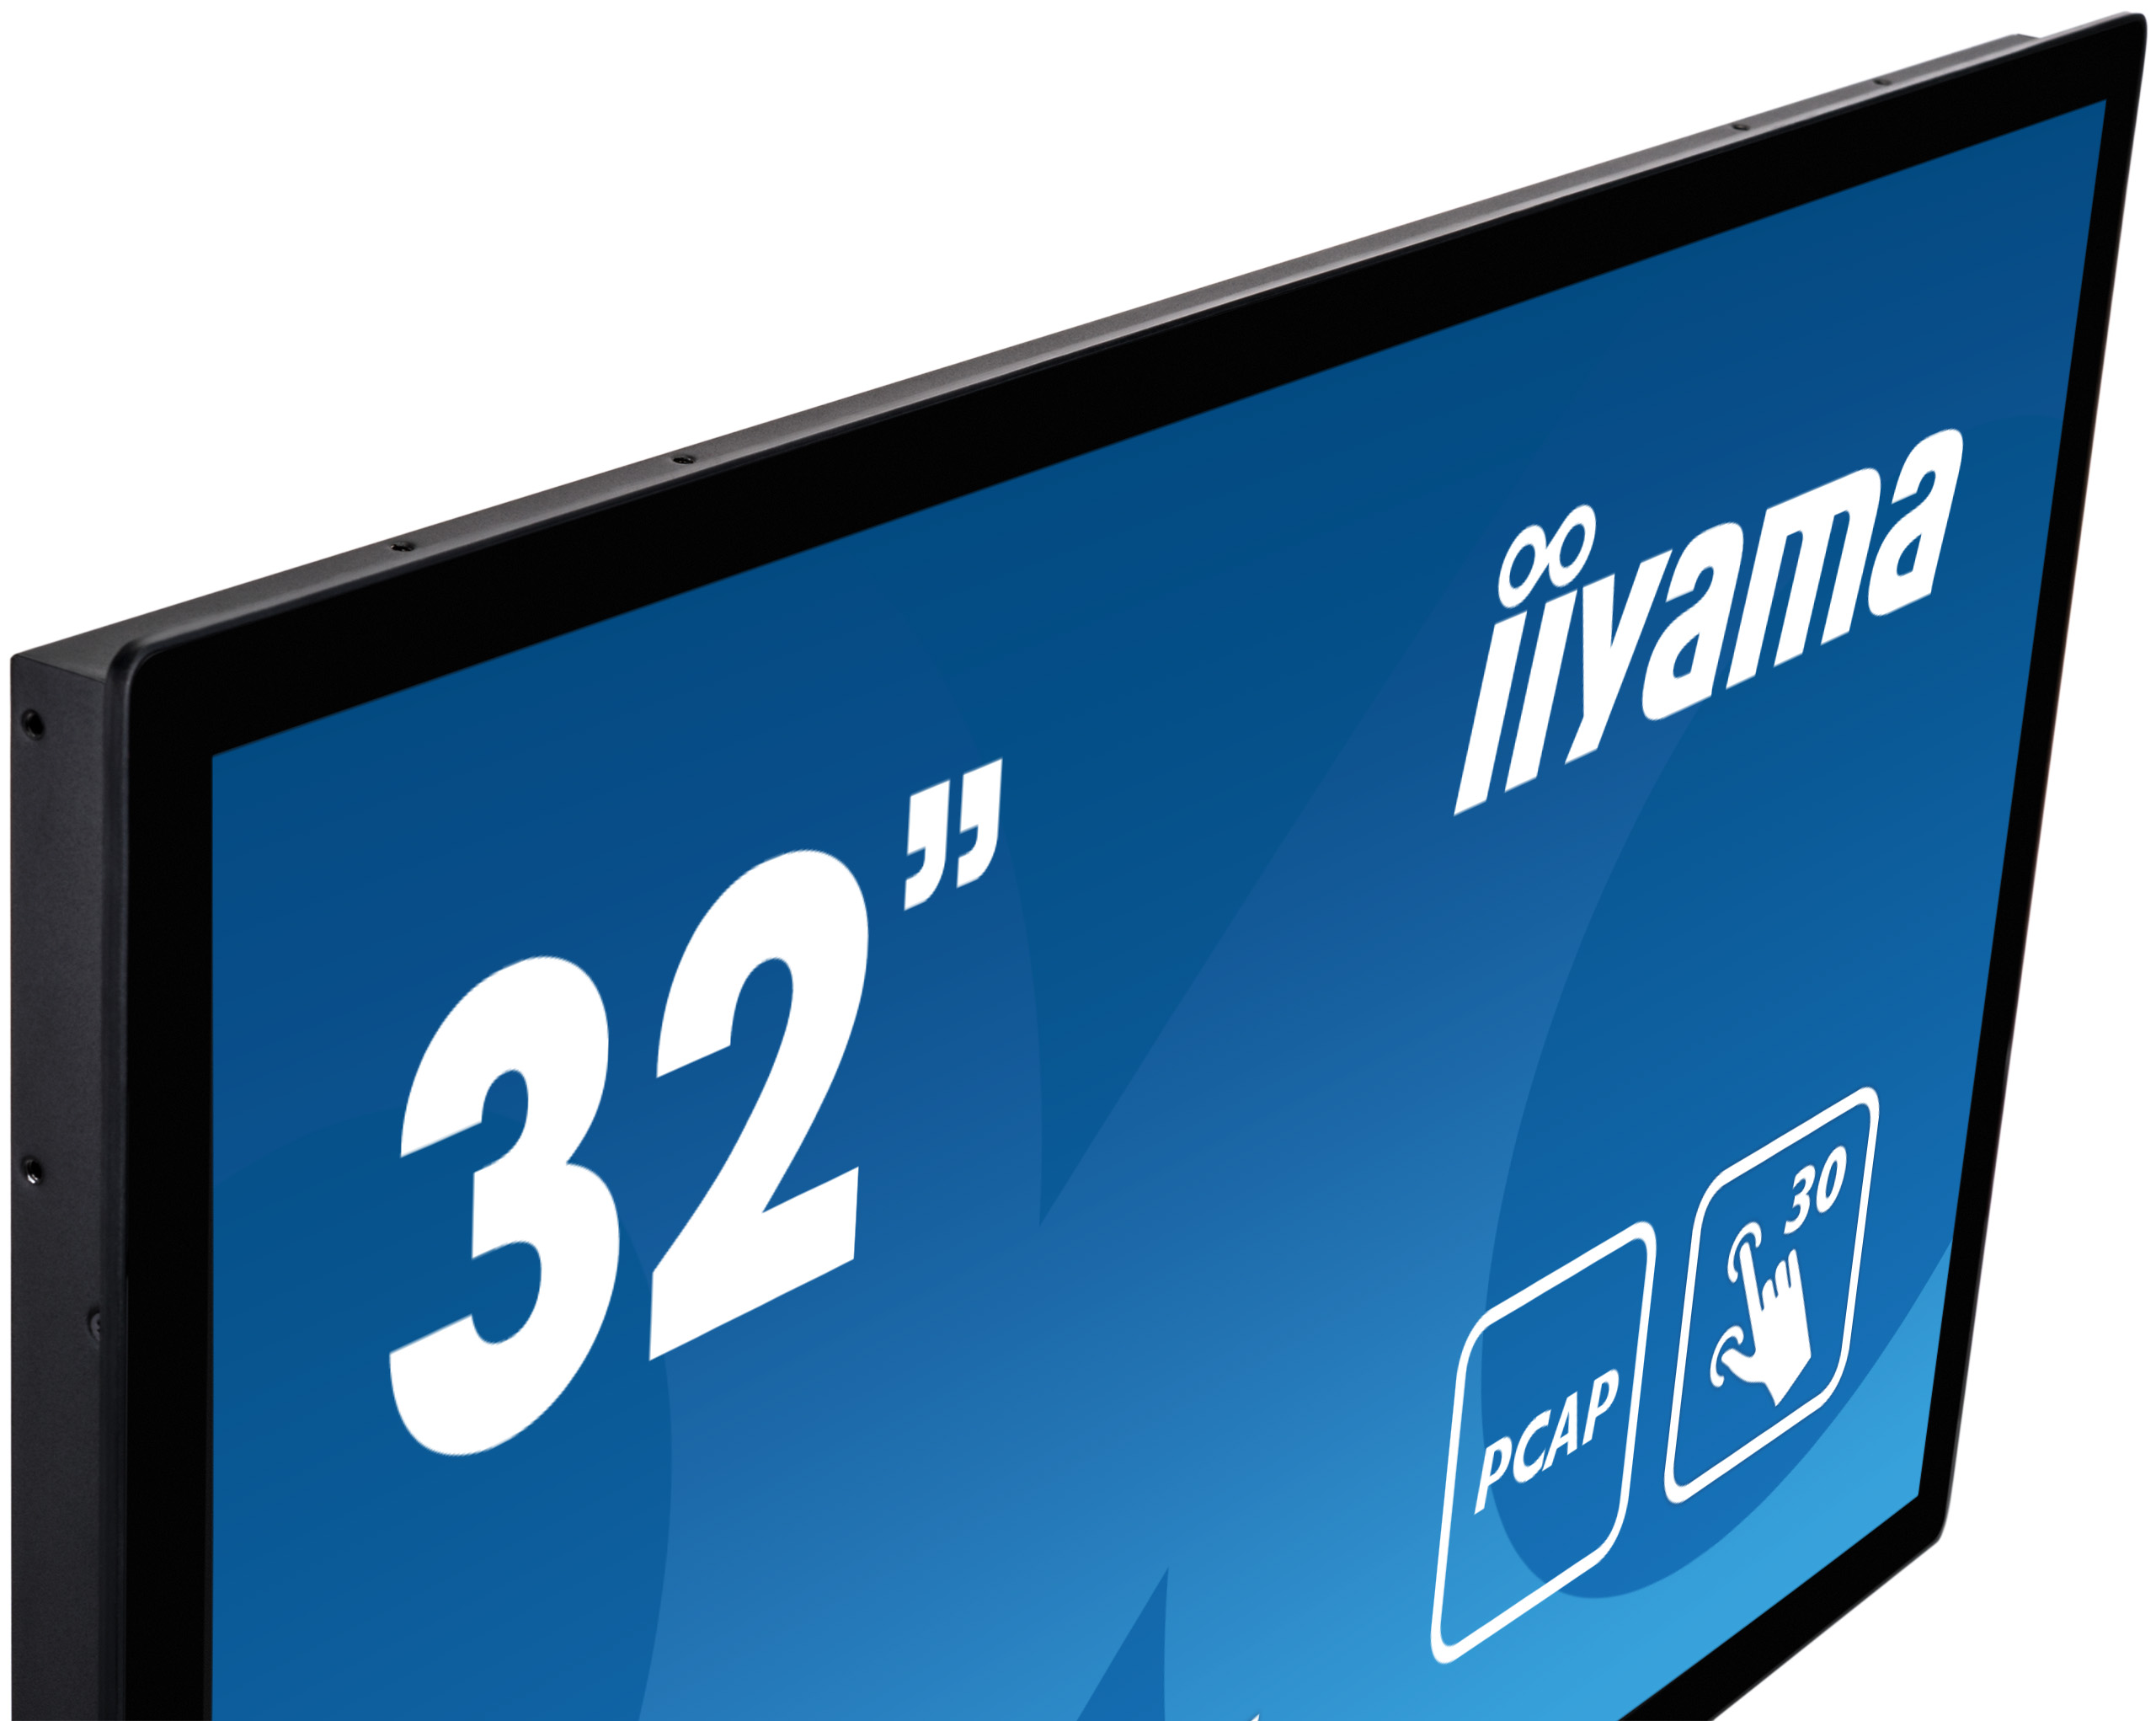 iiyama ProLite TF3215MC-B1 - 32 Zoll - 460 cd/m² - Full-HD - 1920x1080 Pixel - 30 Punkt - Multitouch Display